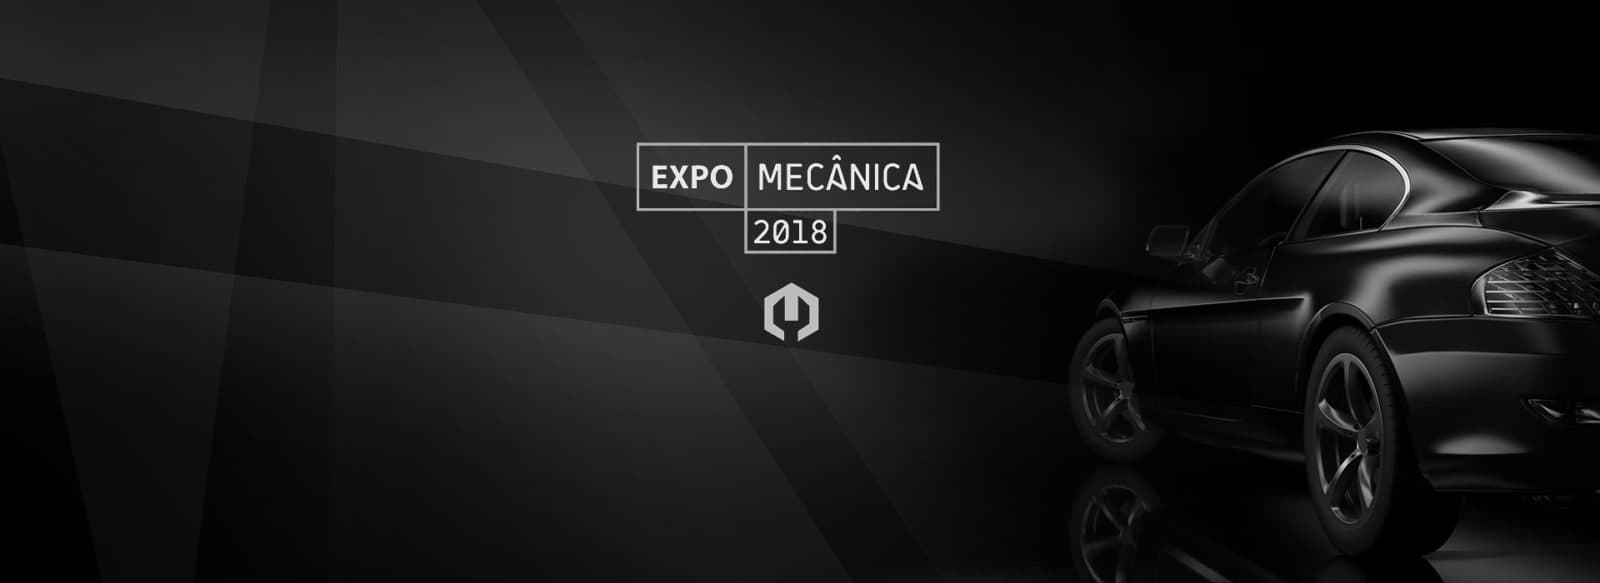 expo-mecanica-pt-2018